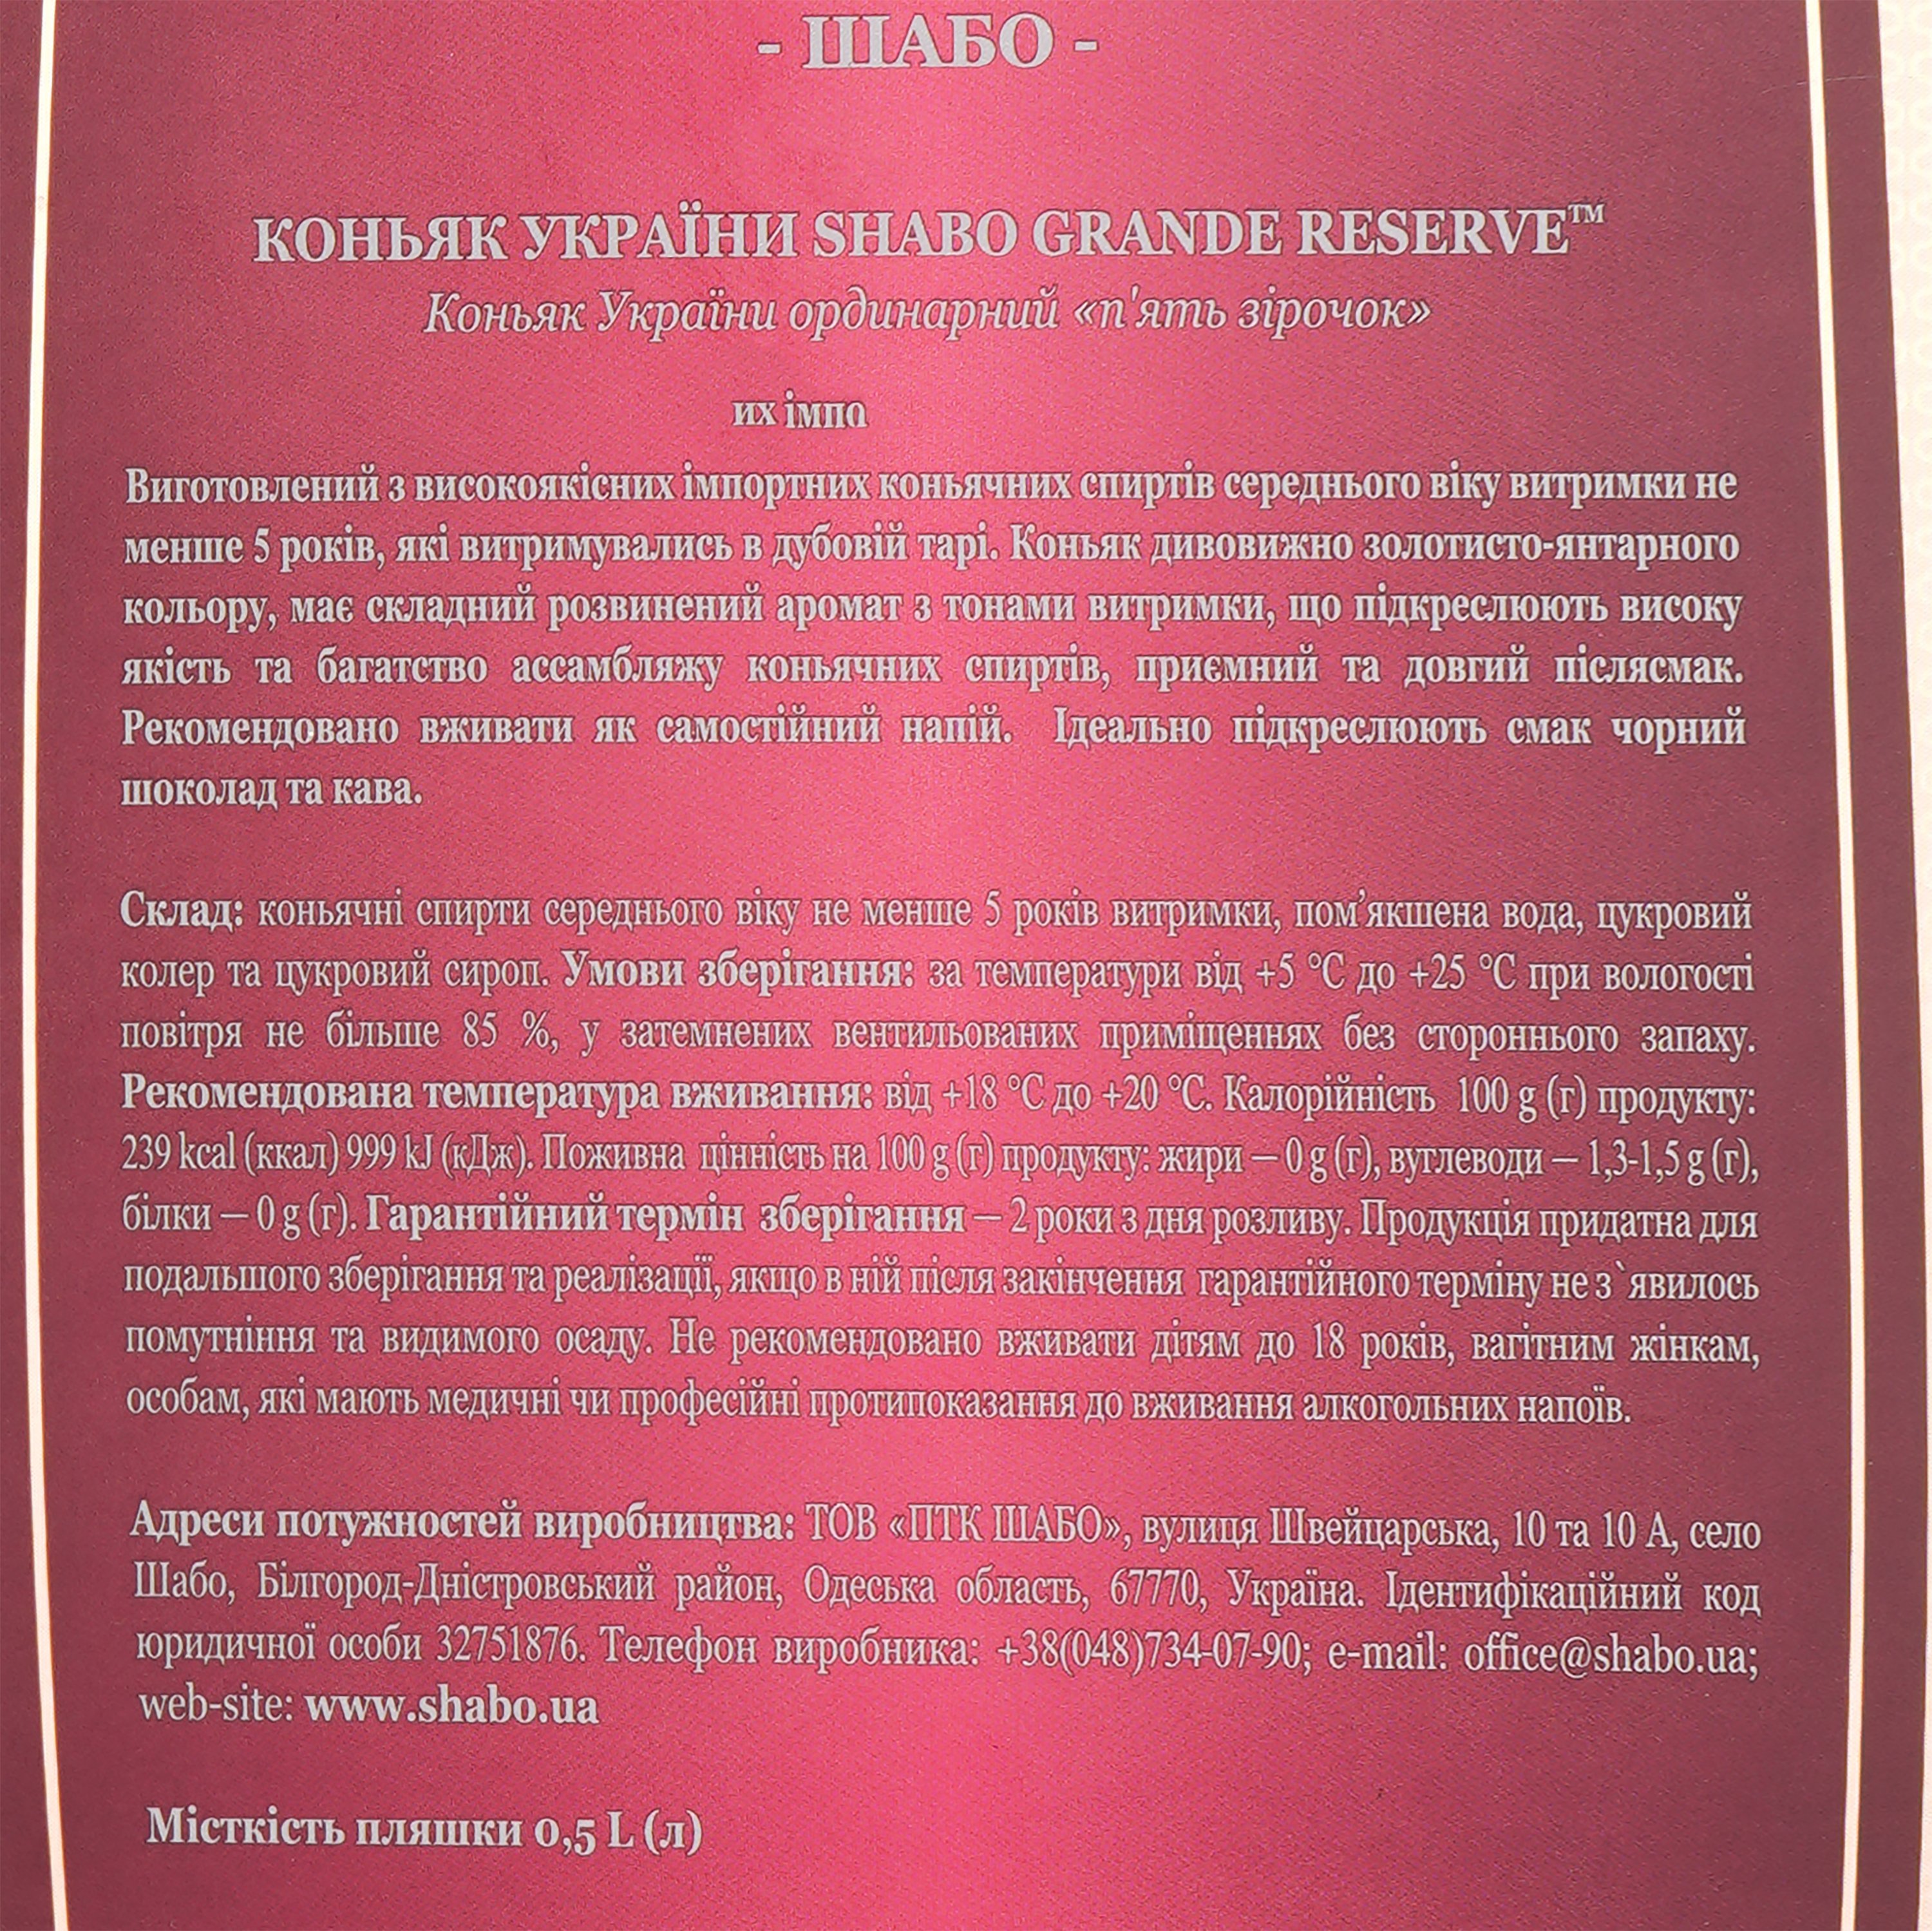 Коньяк Украины Shabo Grande Reserve, 5 лет, подарочная упаковка,40 %, 0,5 л, - фото 4